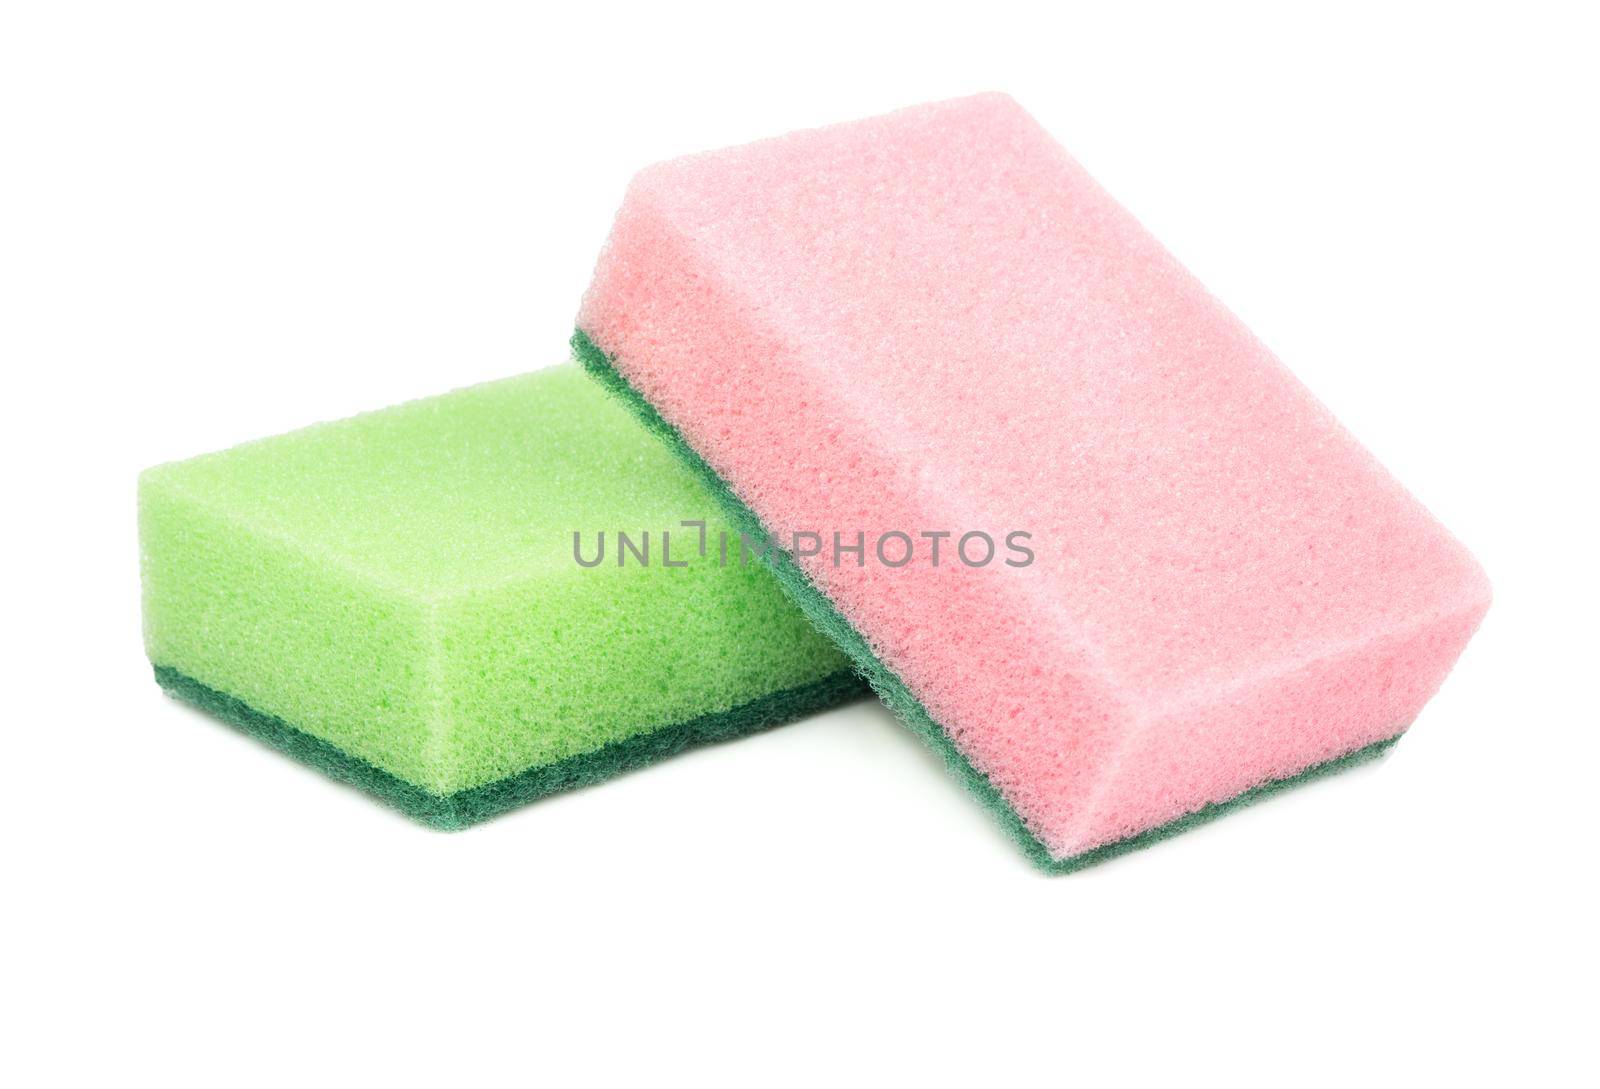 Green and pink dish washing sponge on white background